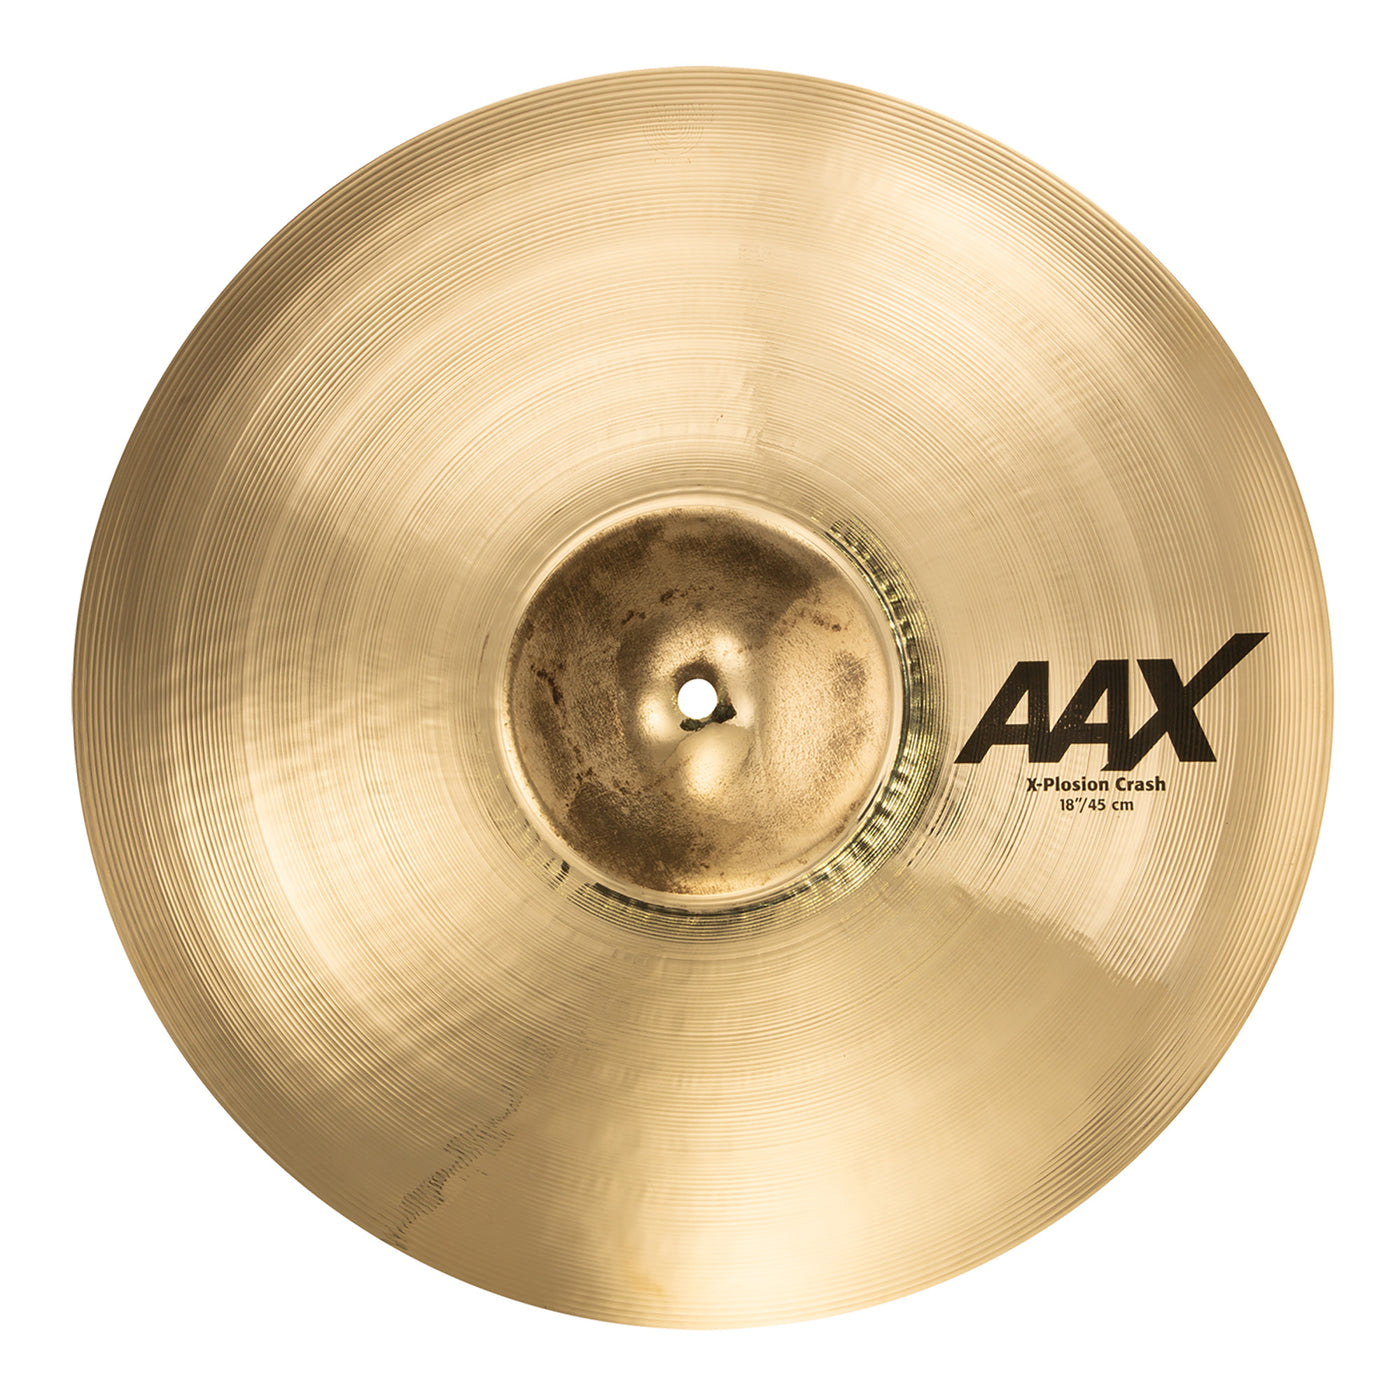 Sabian 18" AAX X-Plosion Crash Cymbal - Brilliant Finish